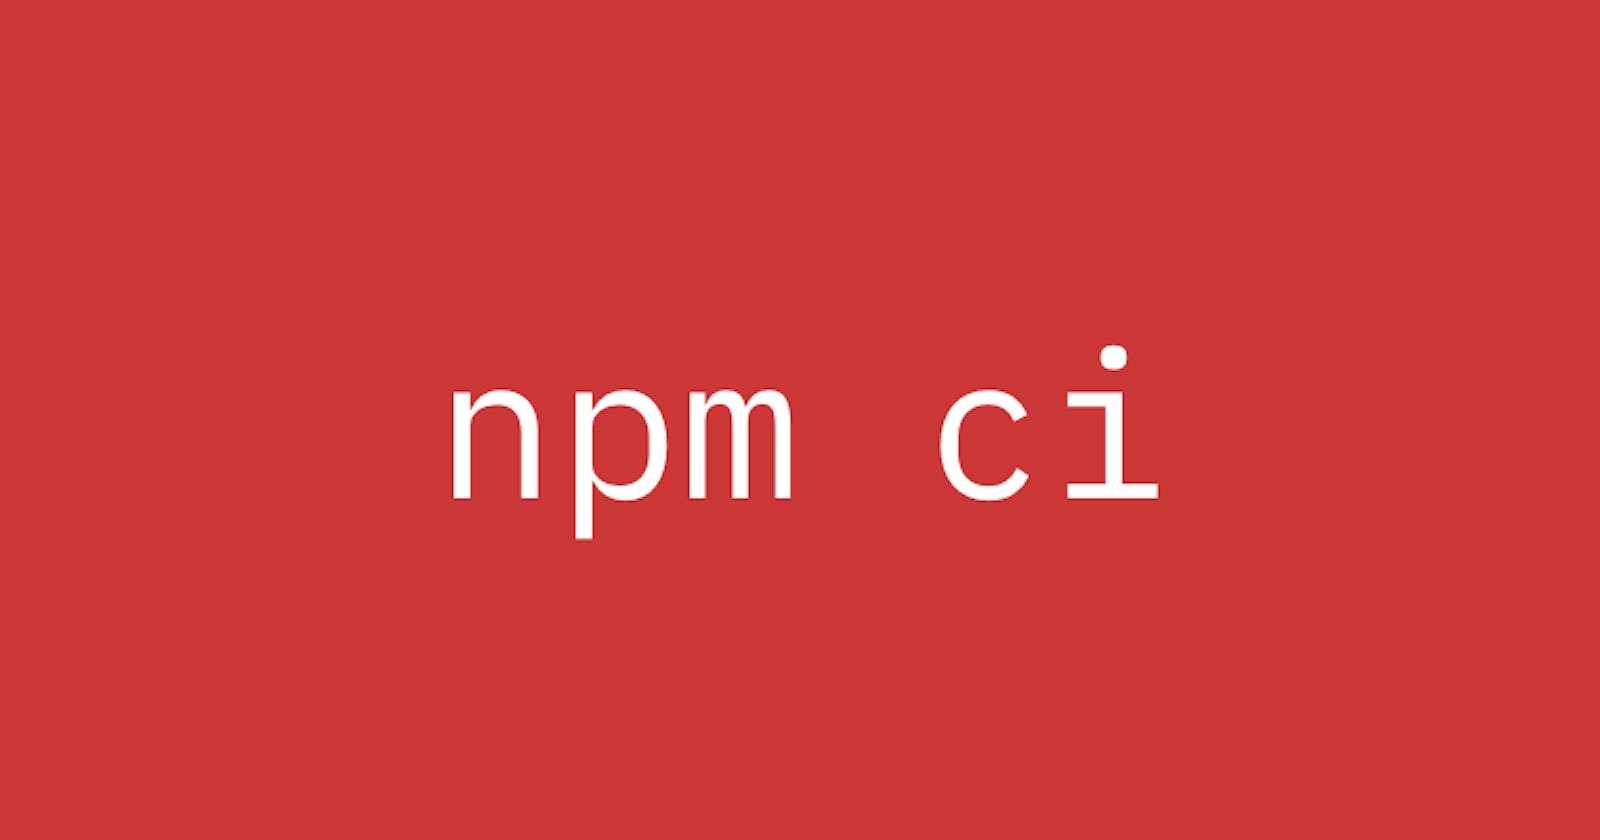 NPM CI: A Command You Should Know